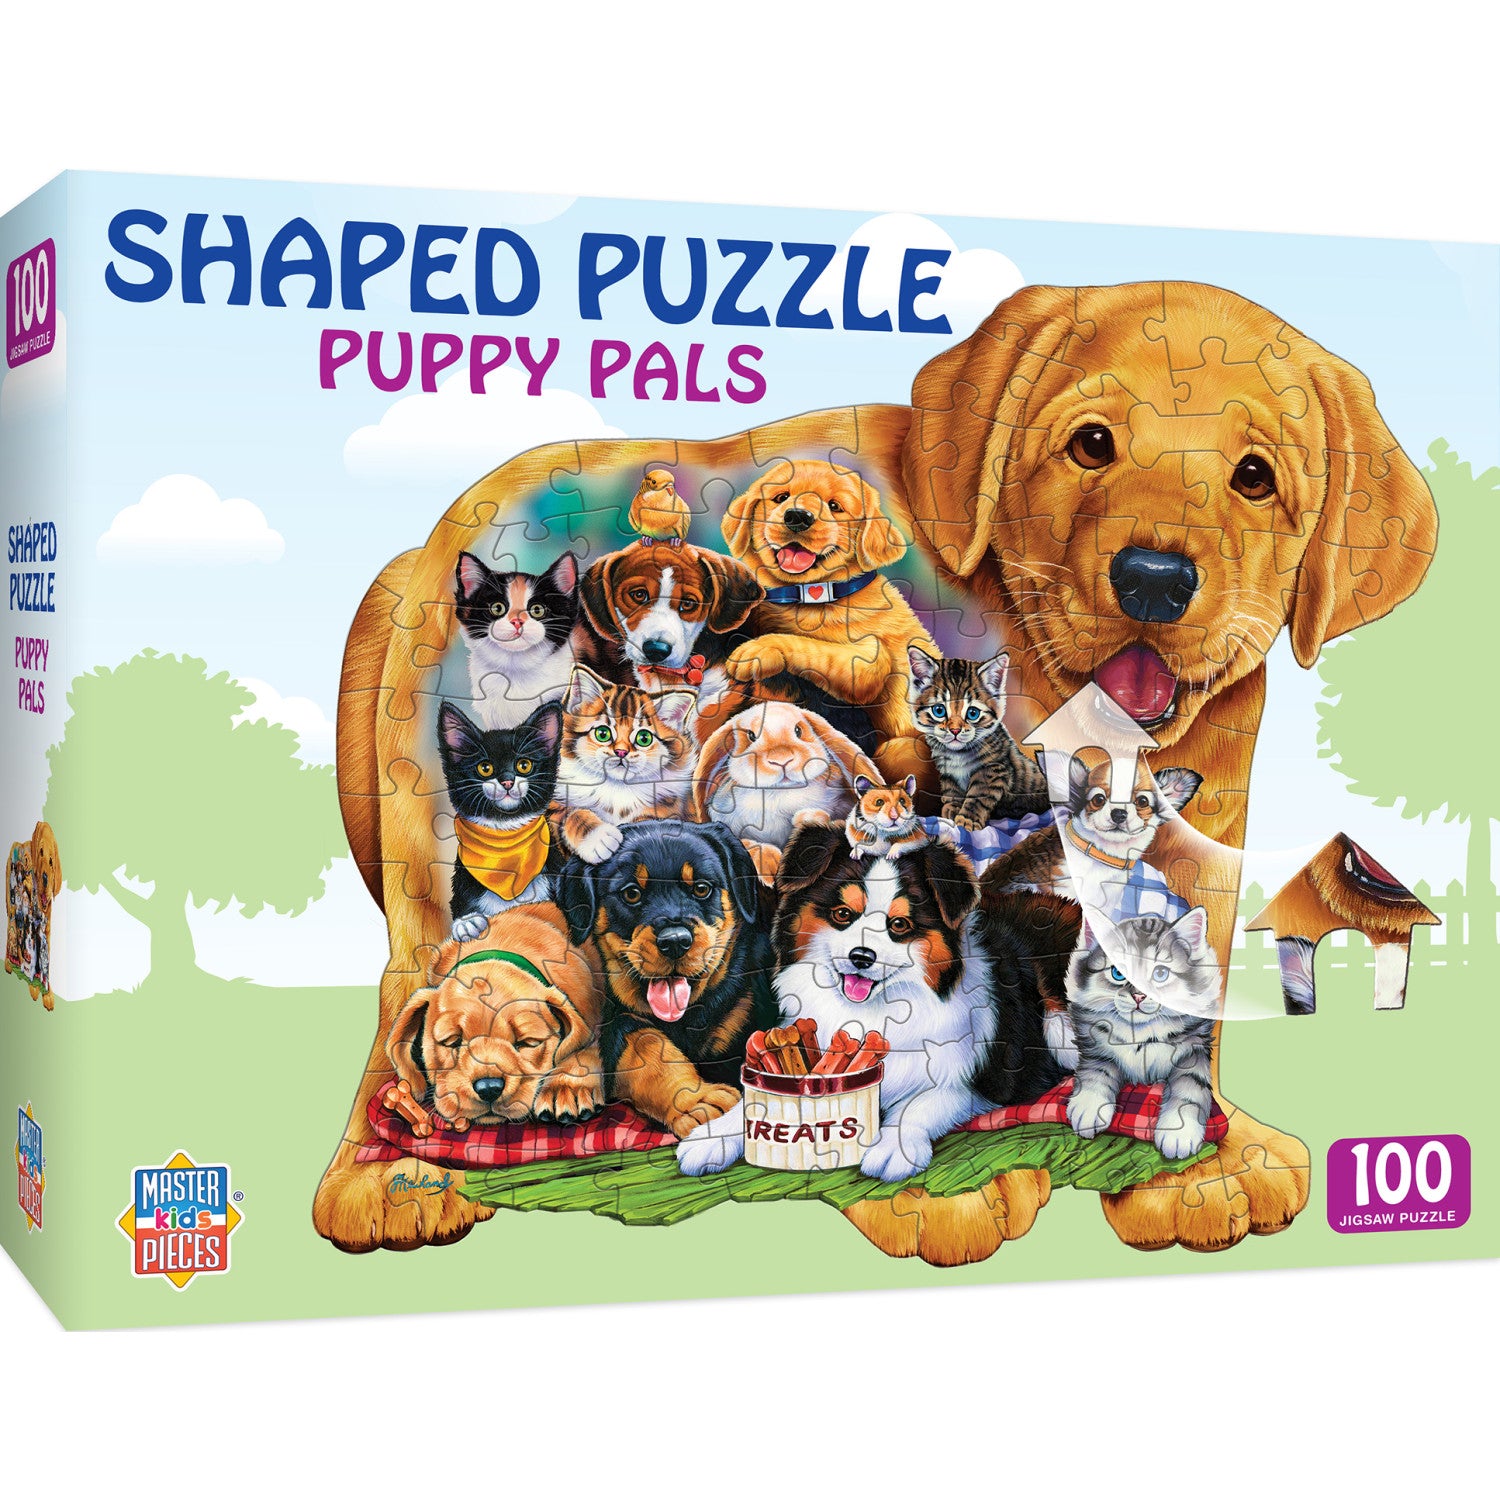 Puppy Pals - 100 Piece Shaped Puzzle